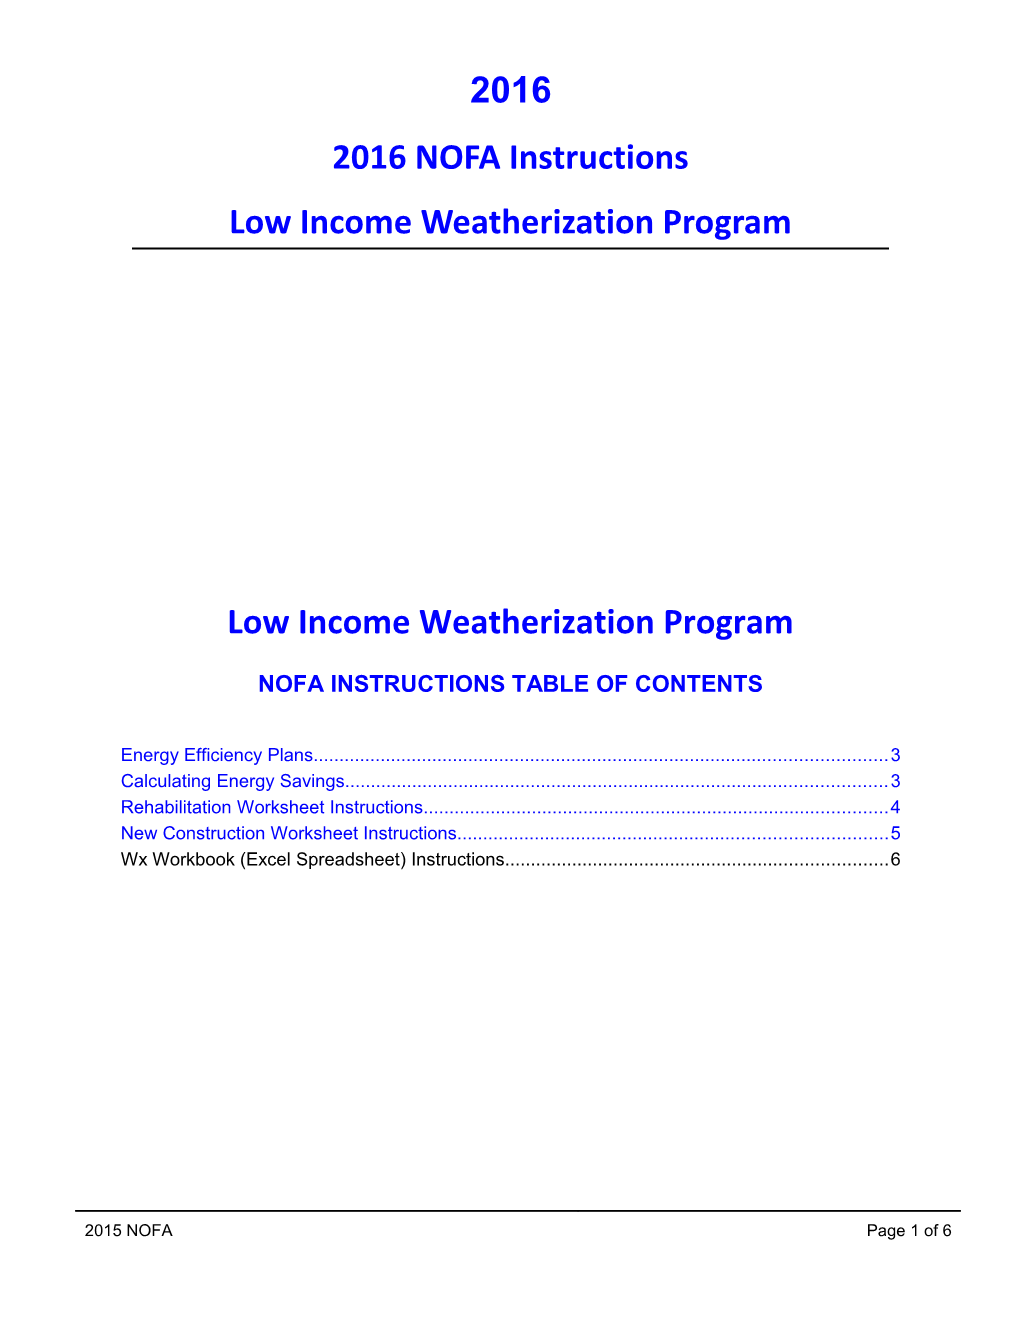 NOFA Instructions Part 7 Low Income Weatherization Program Materials